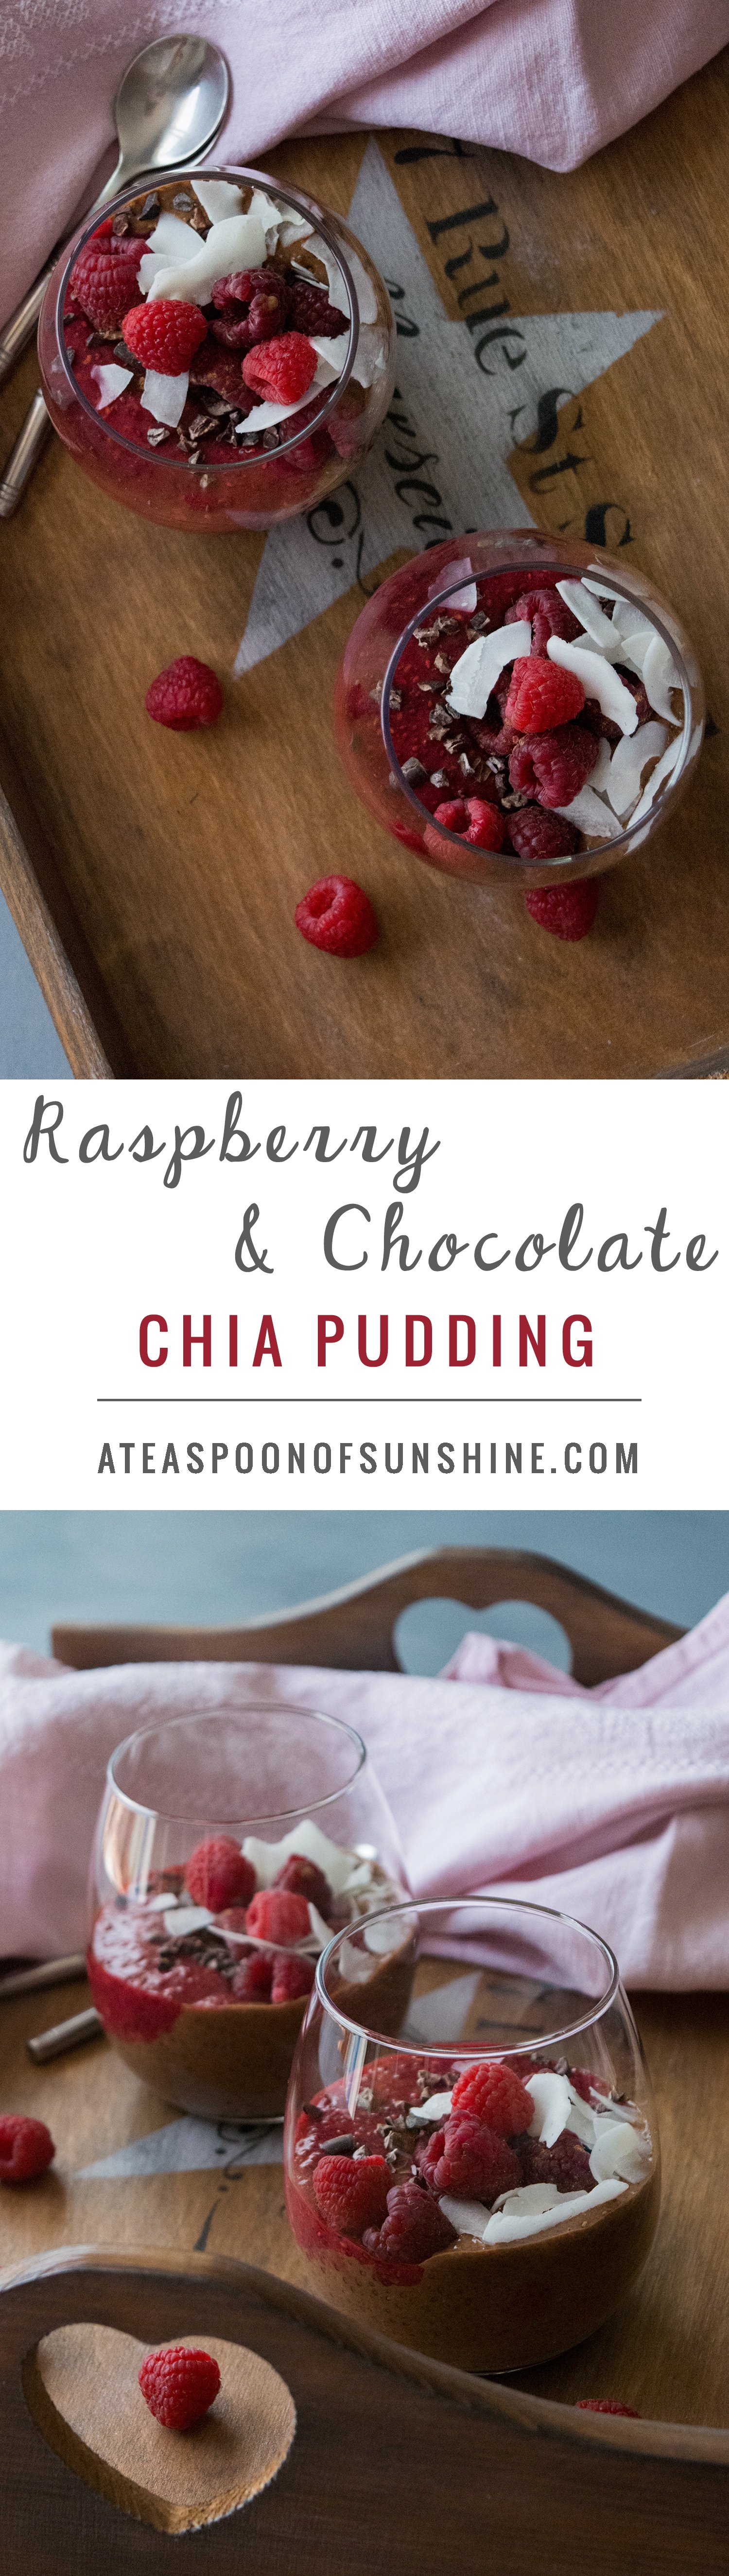 Raspberry & Chocolate Chia Pudding